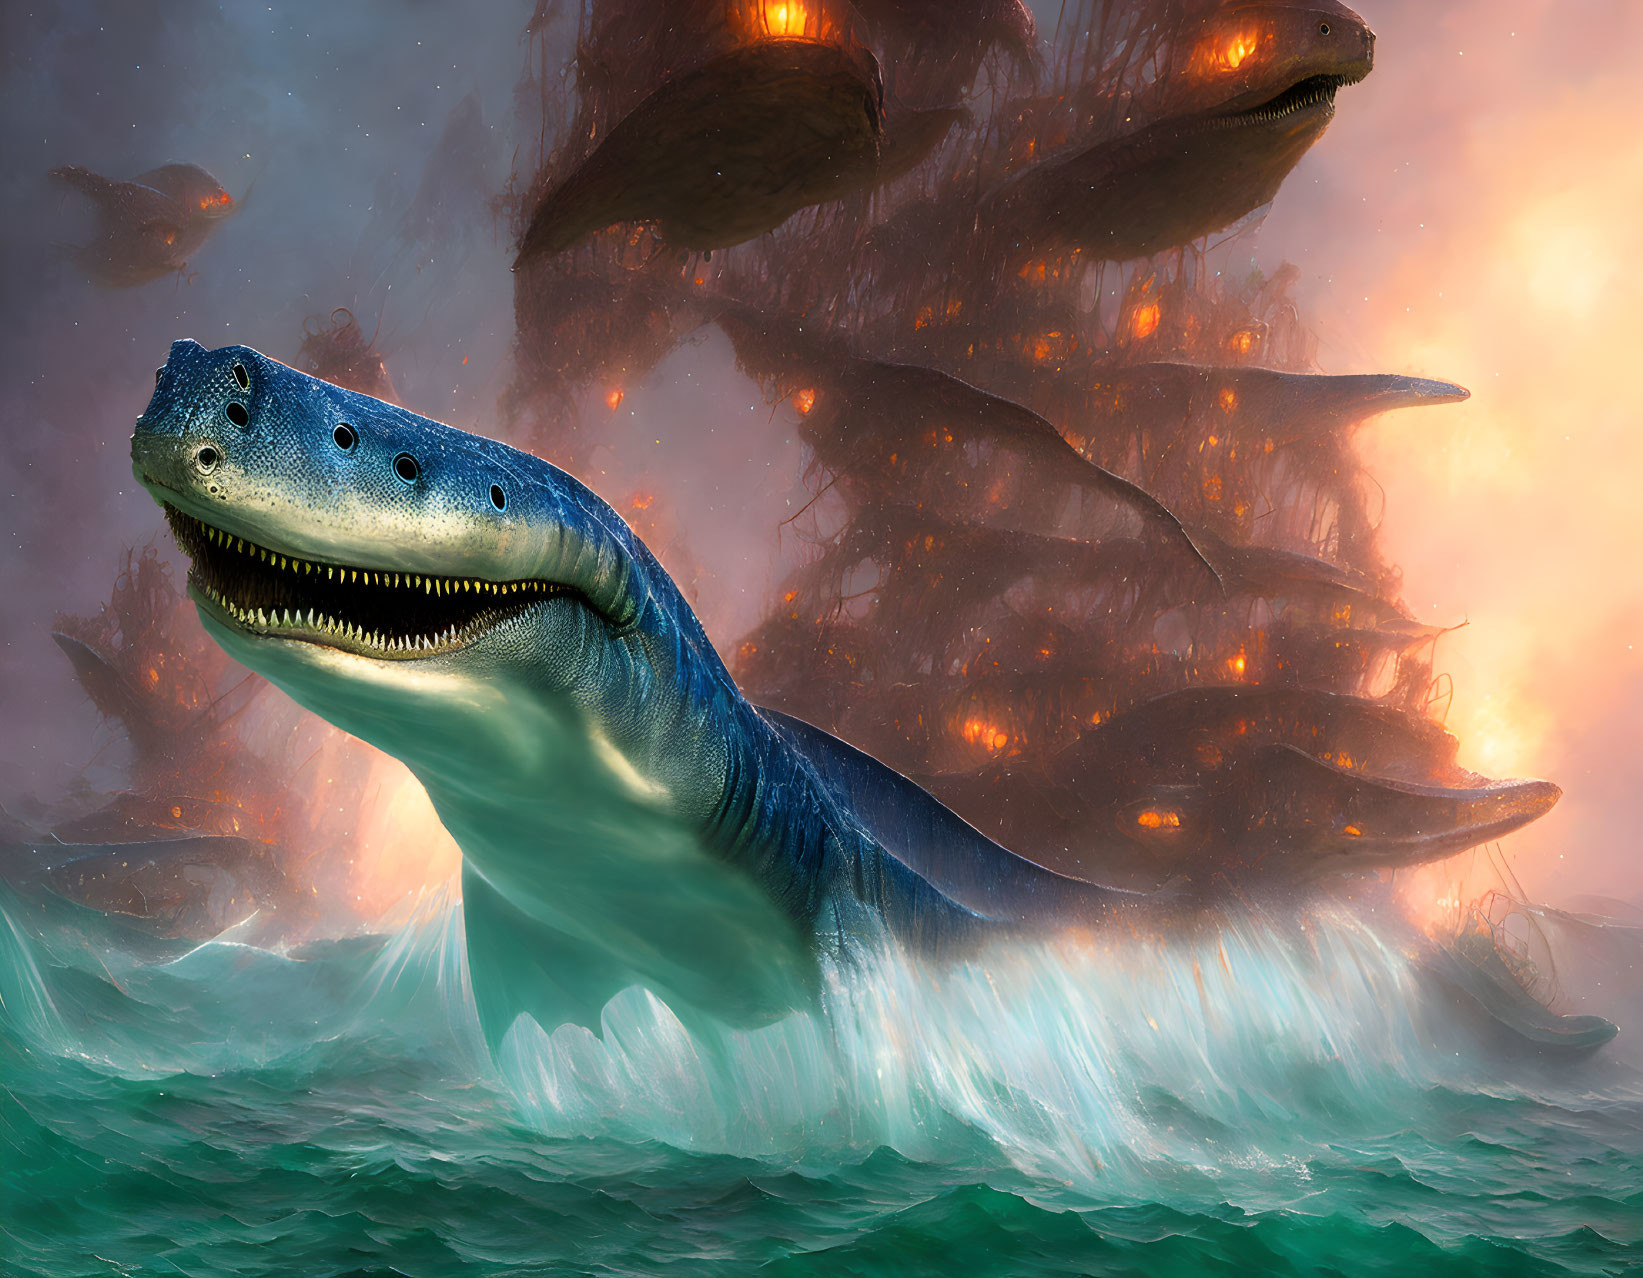 Digital artwork: Giant sea creature in ocean waves with fiery airborne islands